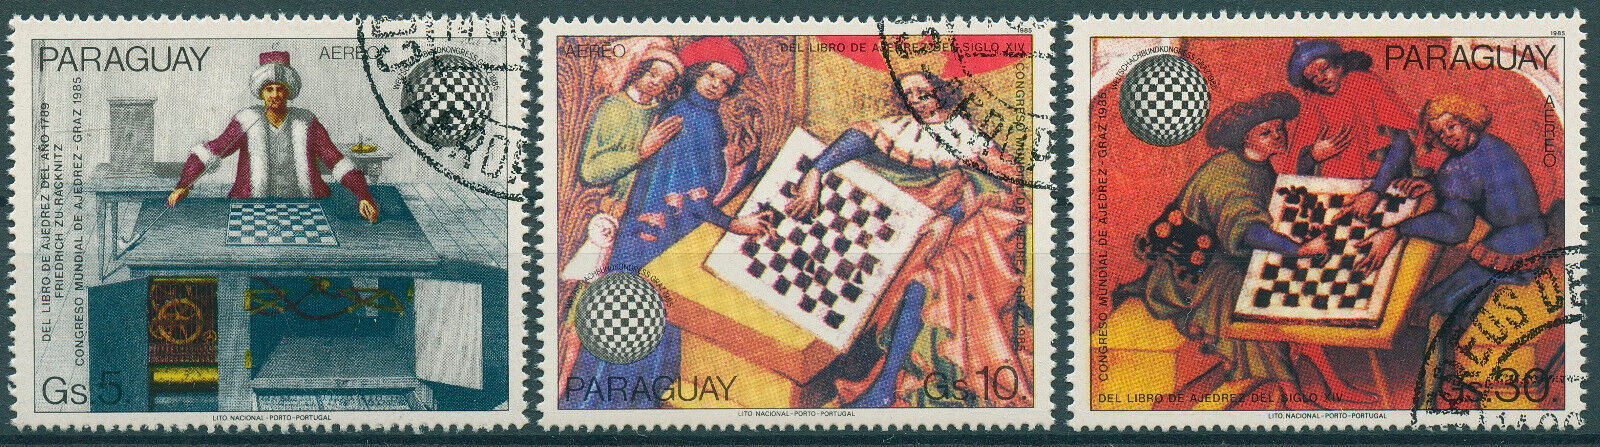 Paraguay 1982 CTO Sports Stamps World Chess Championships 3v Set